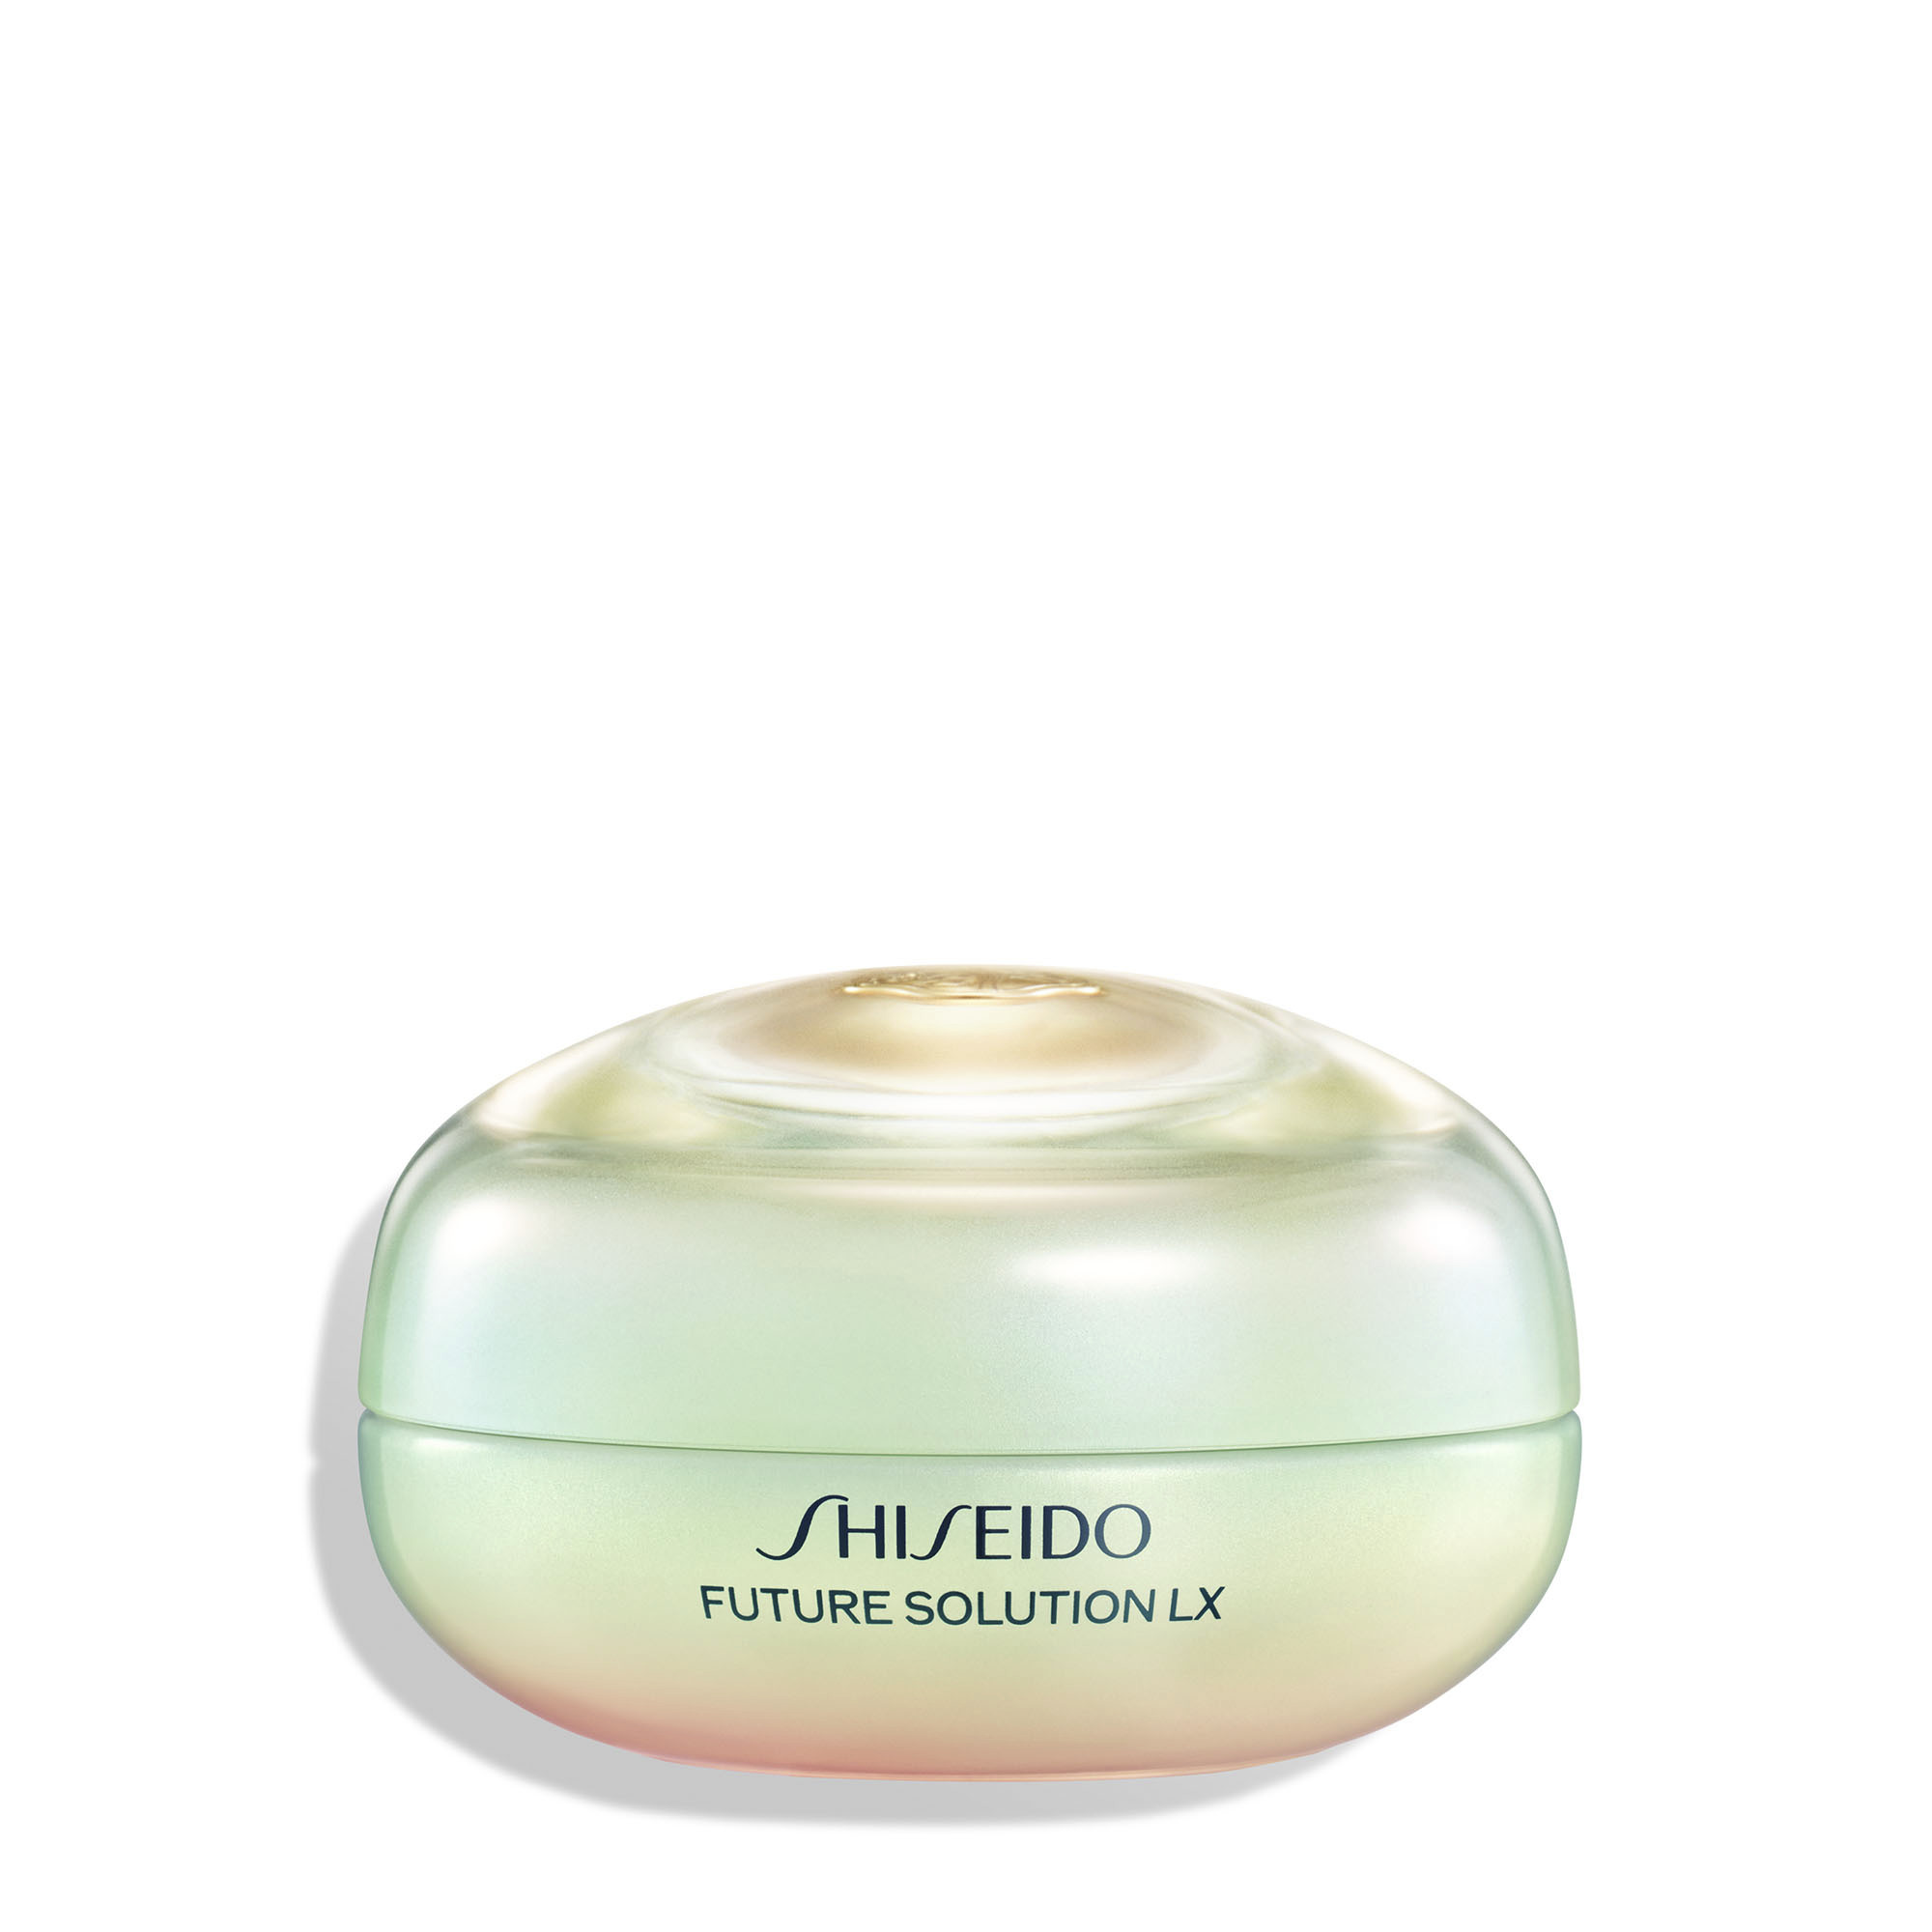 Shiseido Future Solution LX Legendary Enmei Ultimate Brilliance Eye Cream -  15mL